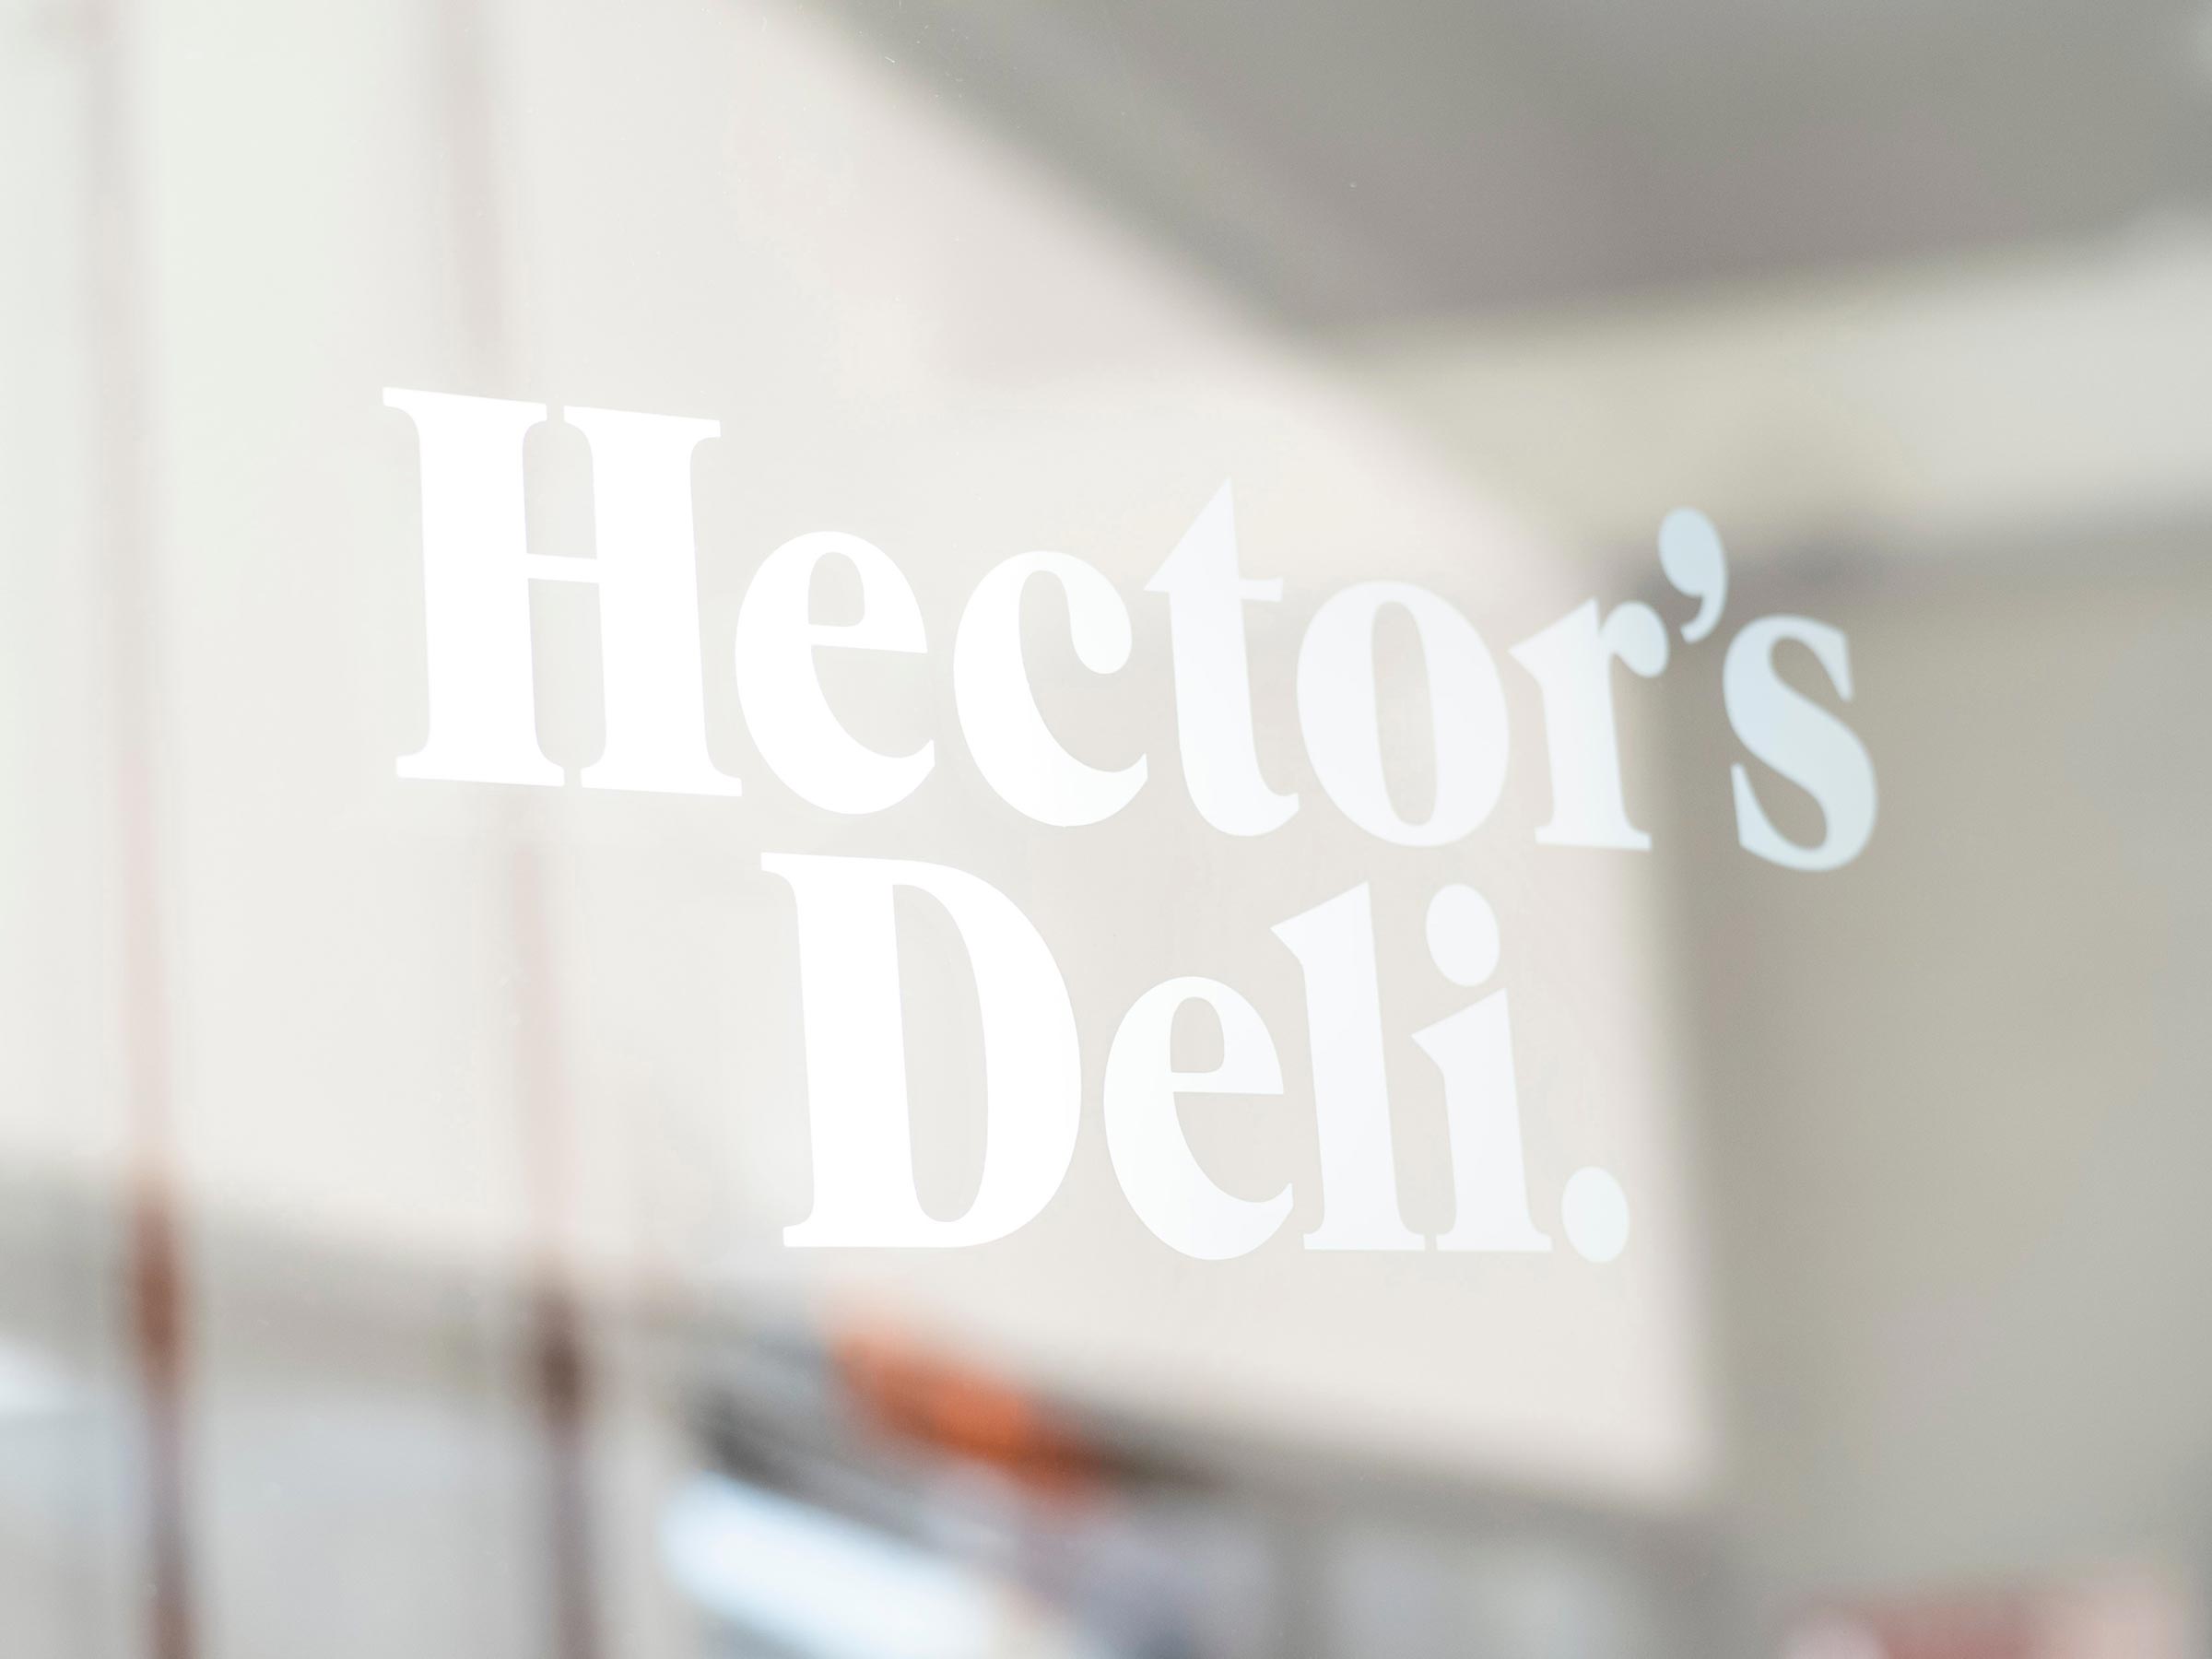 Hector’s Deli